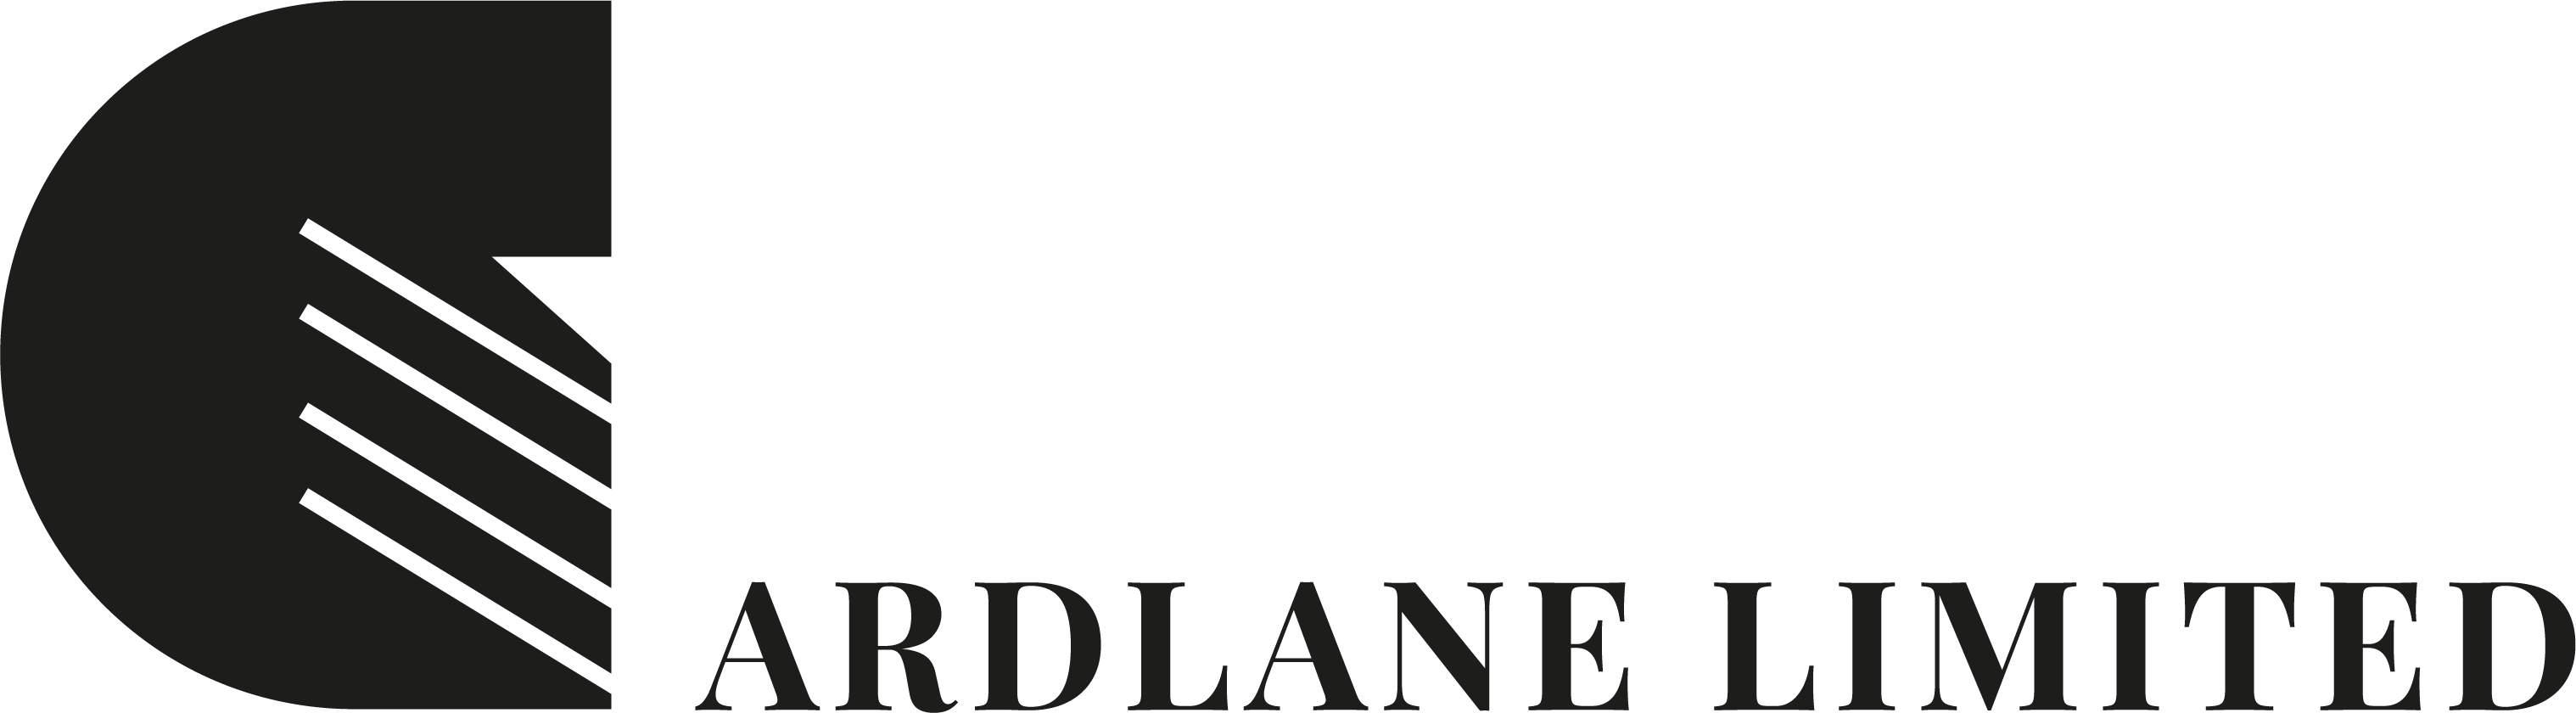 Cardlane_Logo_Black